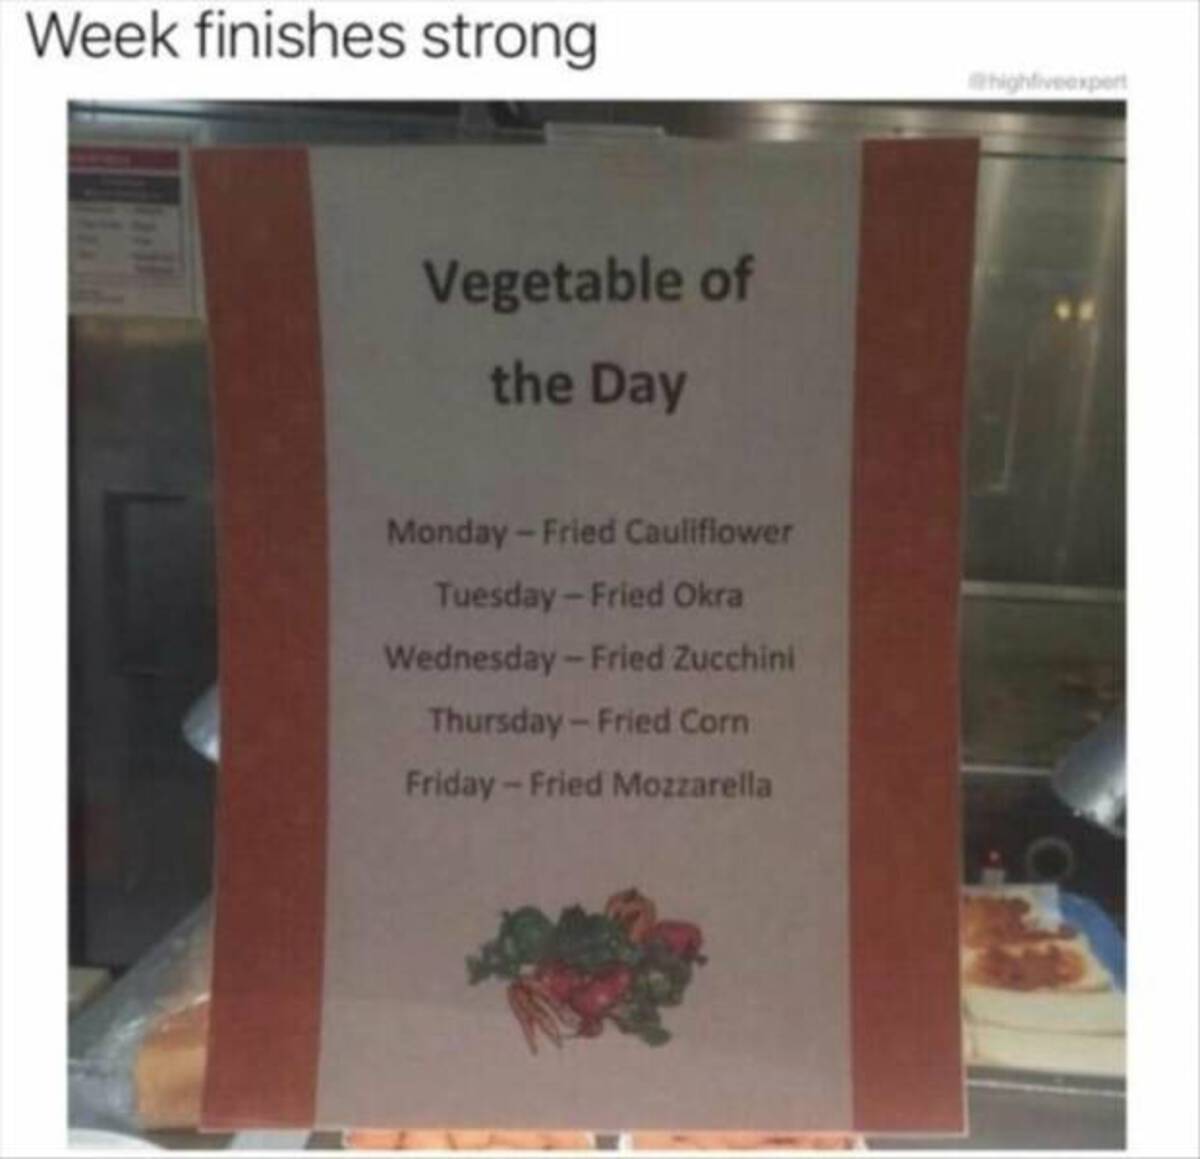 signage - Week finishes strong Vegetable of the Day MondayFried Cauliflower TuesdayFried Okra WednesdayFried Zucchini ThursdayFried Corn FridayFried Mozzarella